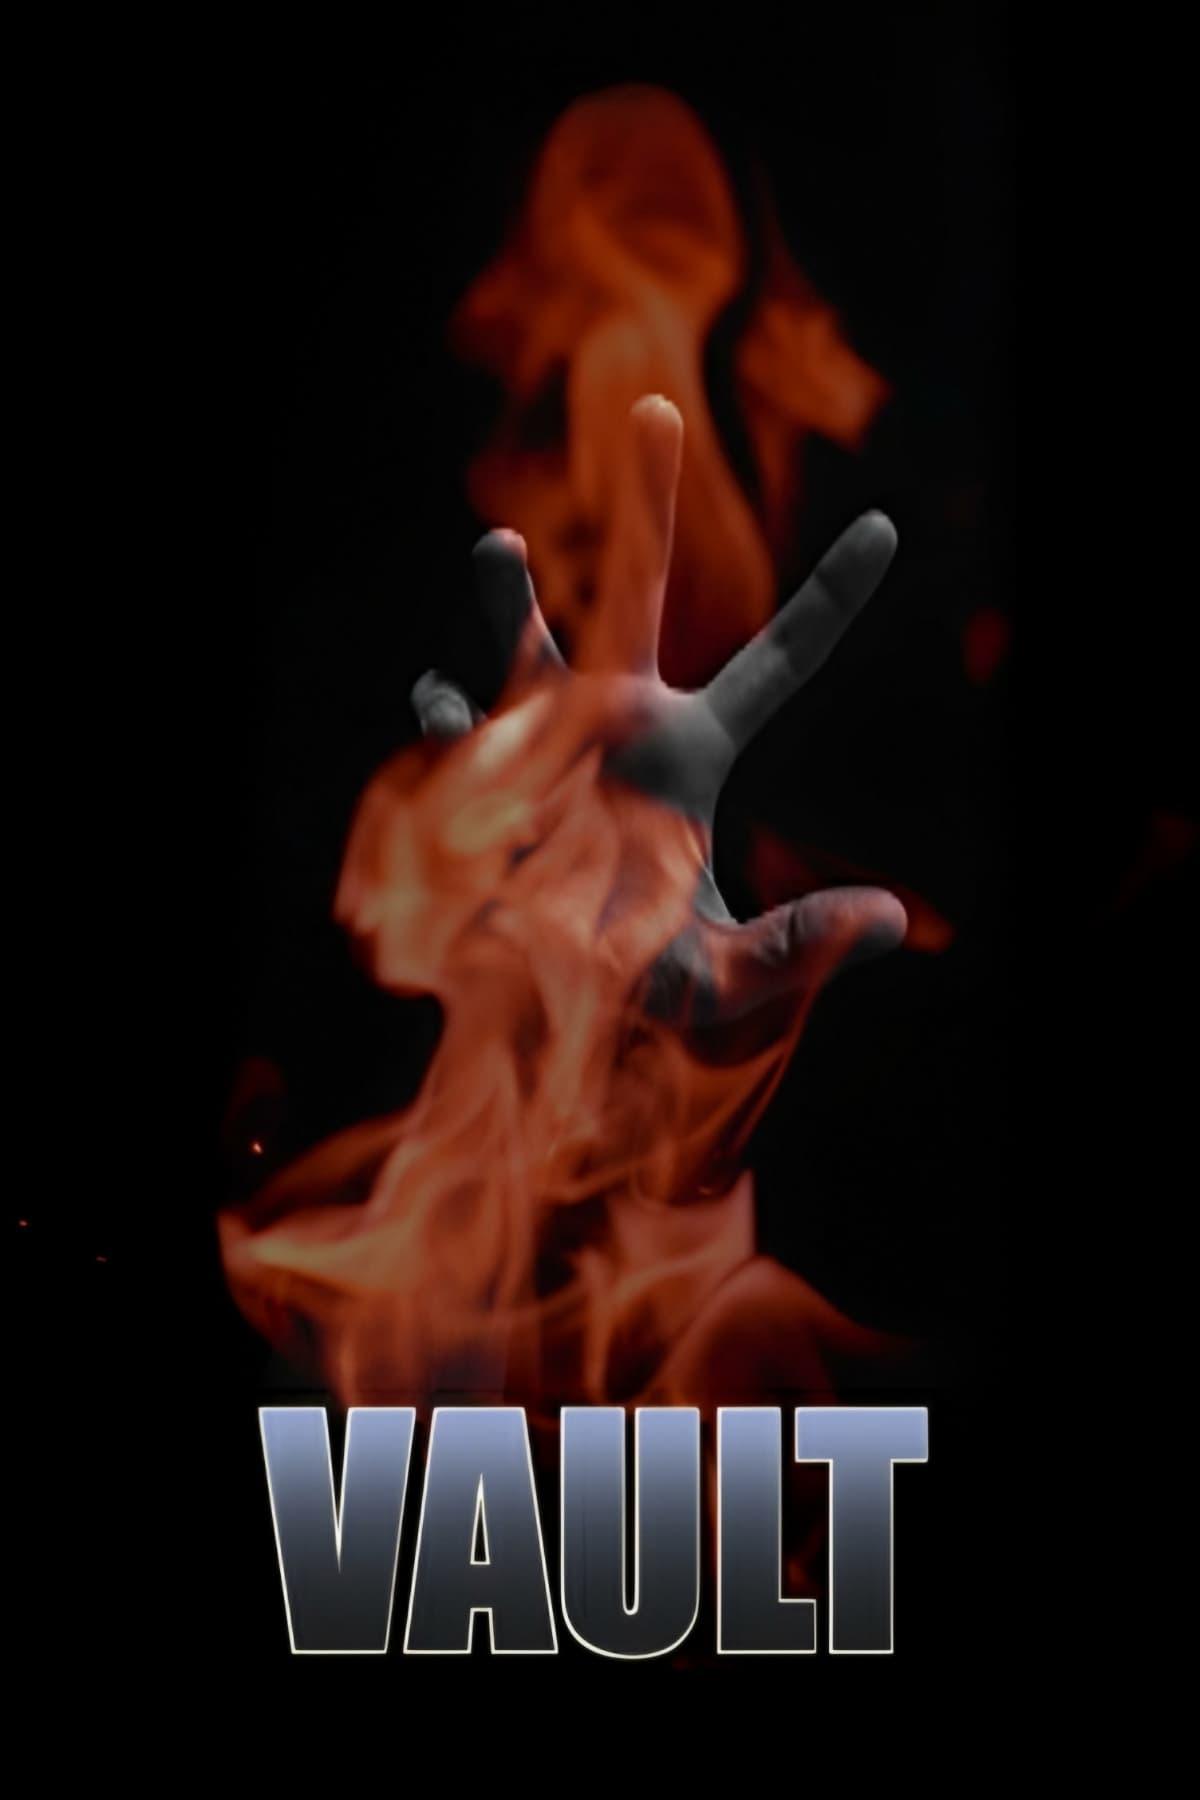 Vault poster